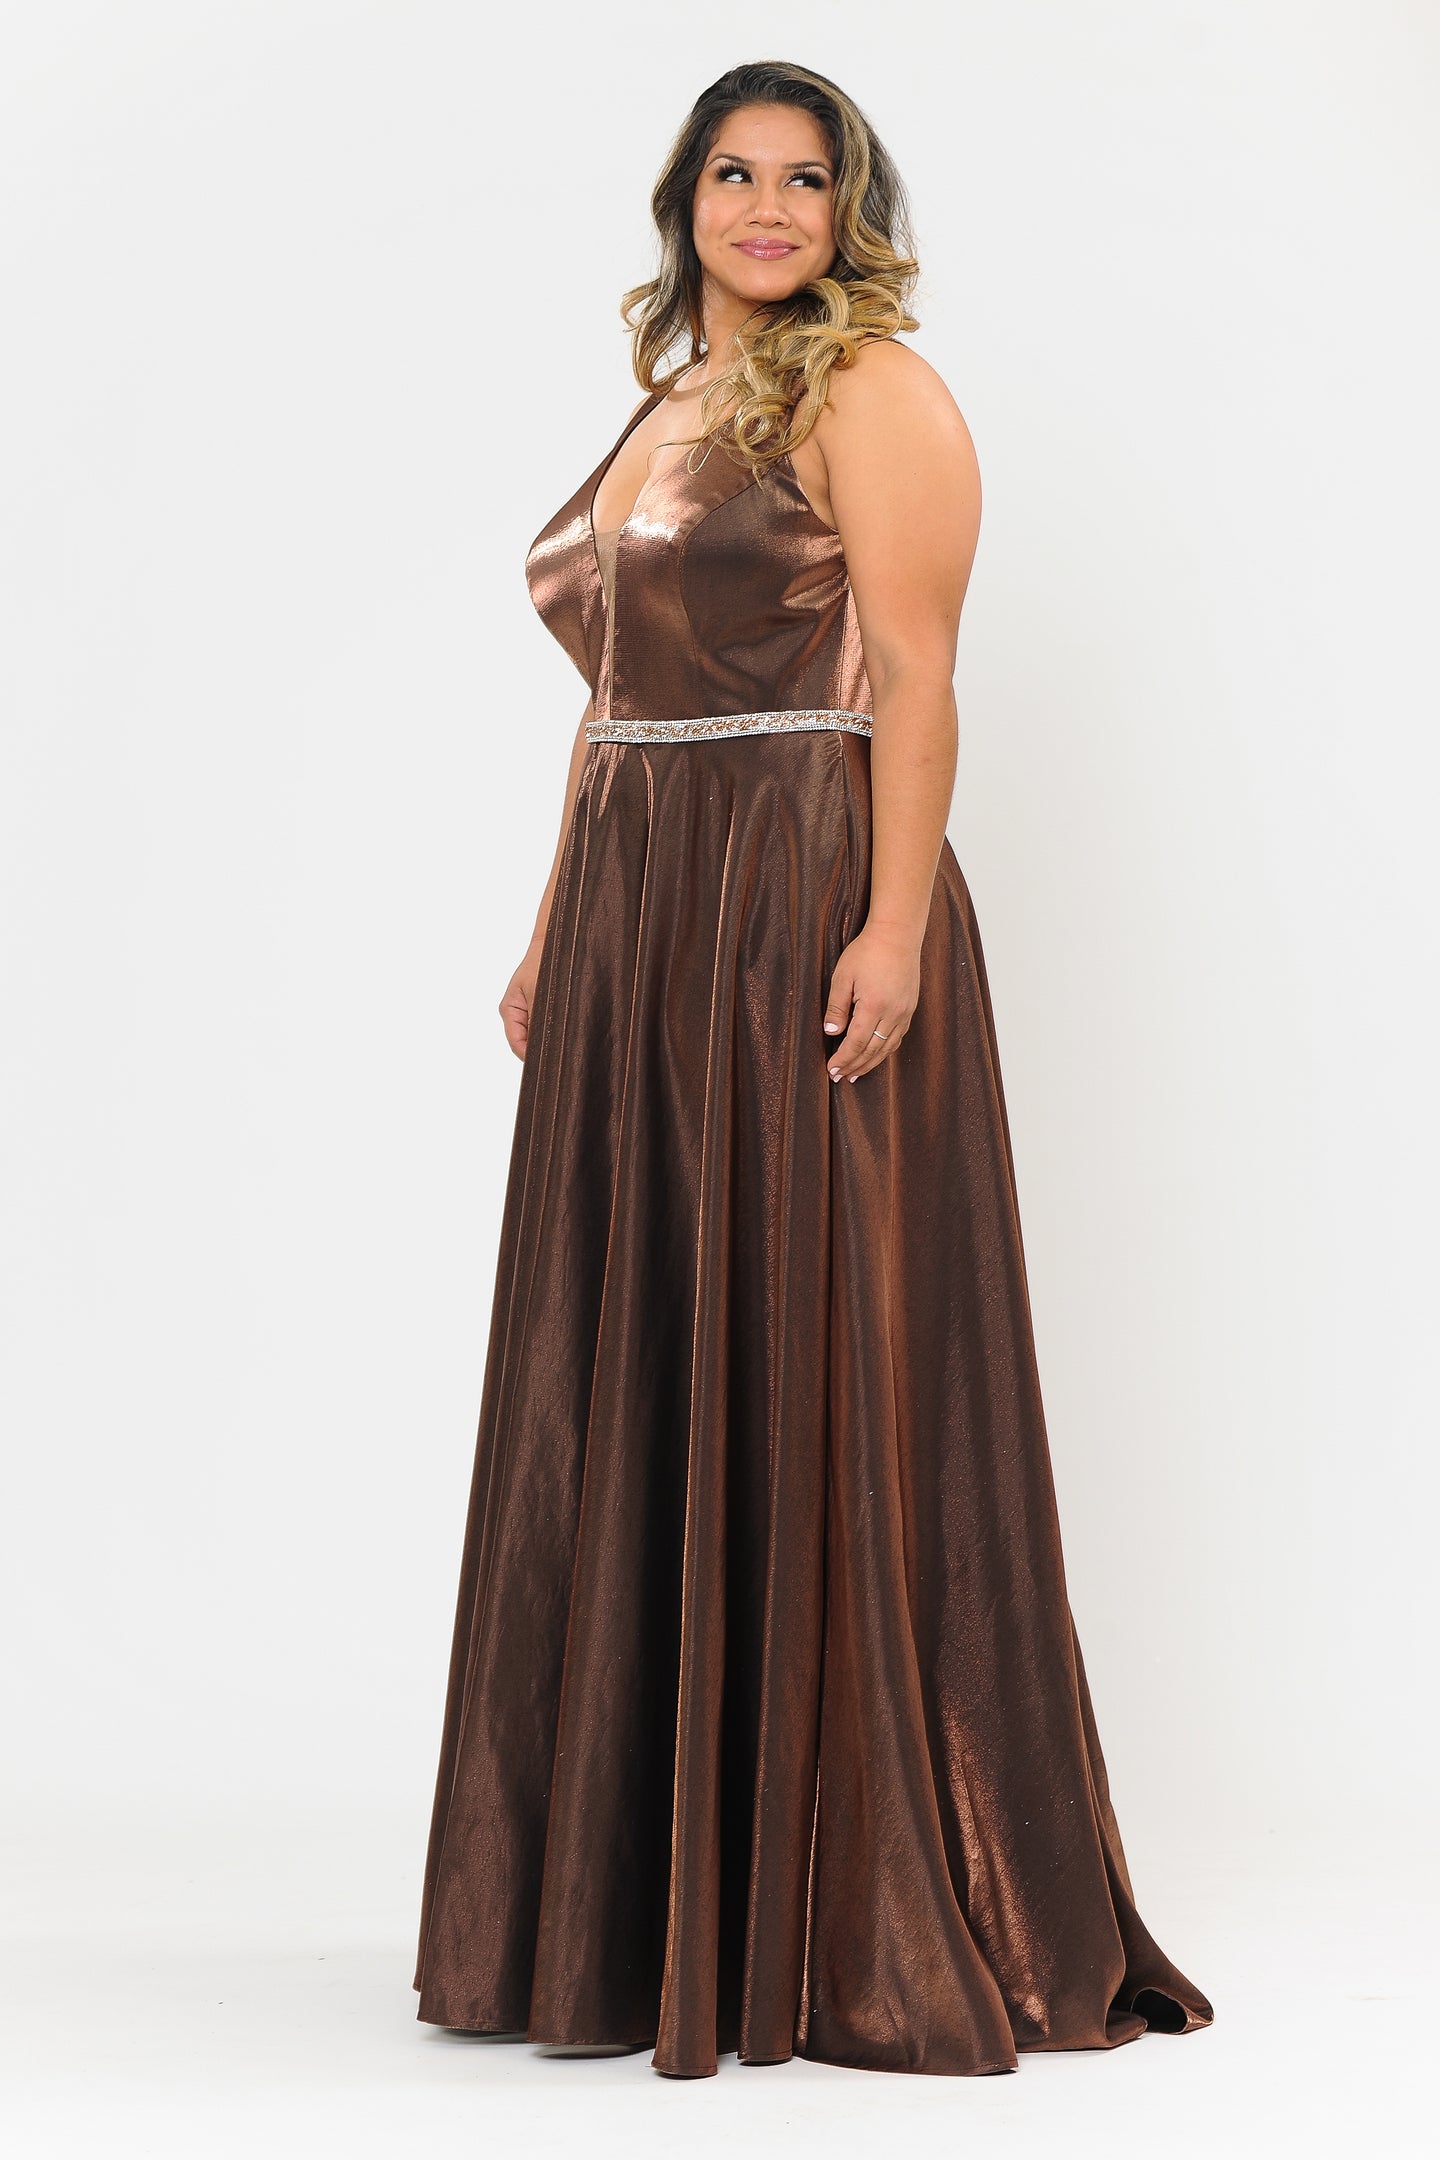 Plus Size Shinny Dress - LAYW1062 - BRONZE - LA Merchandise